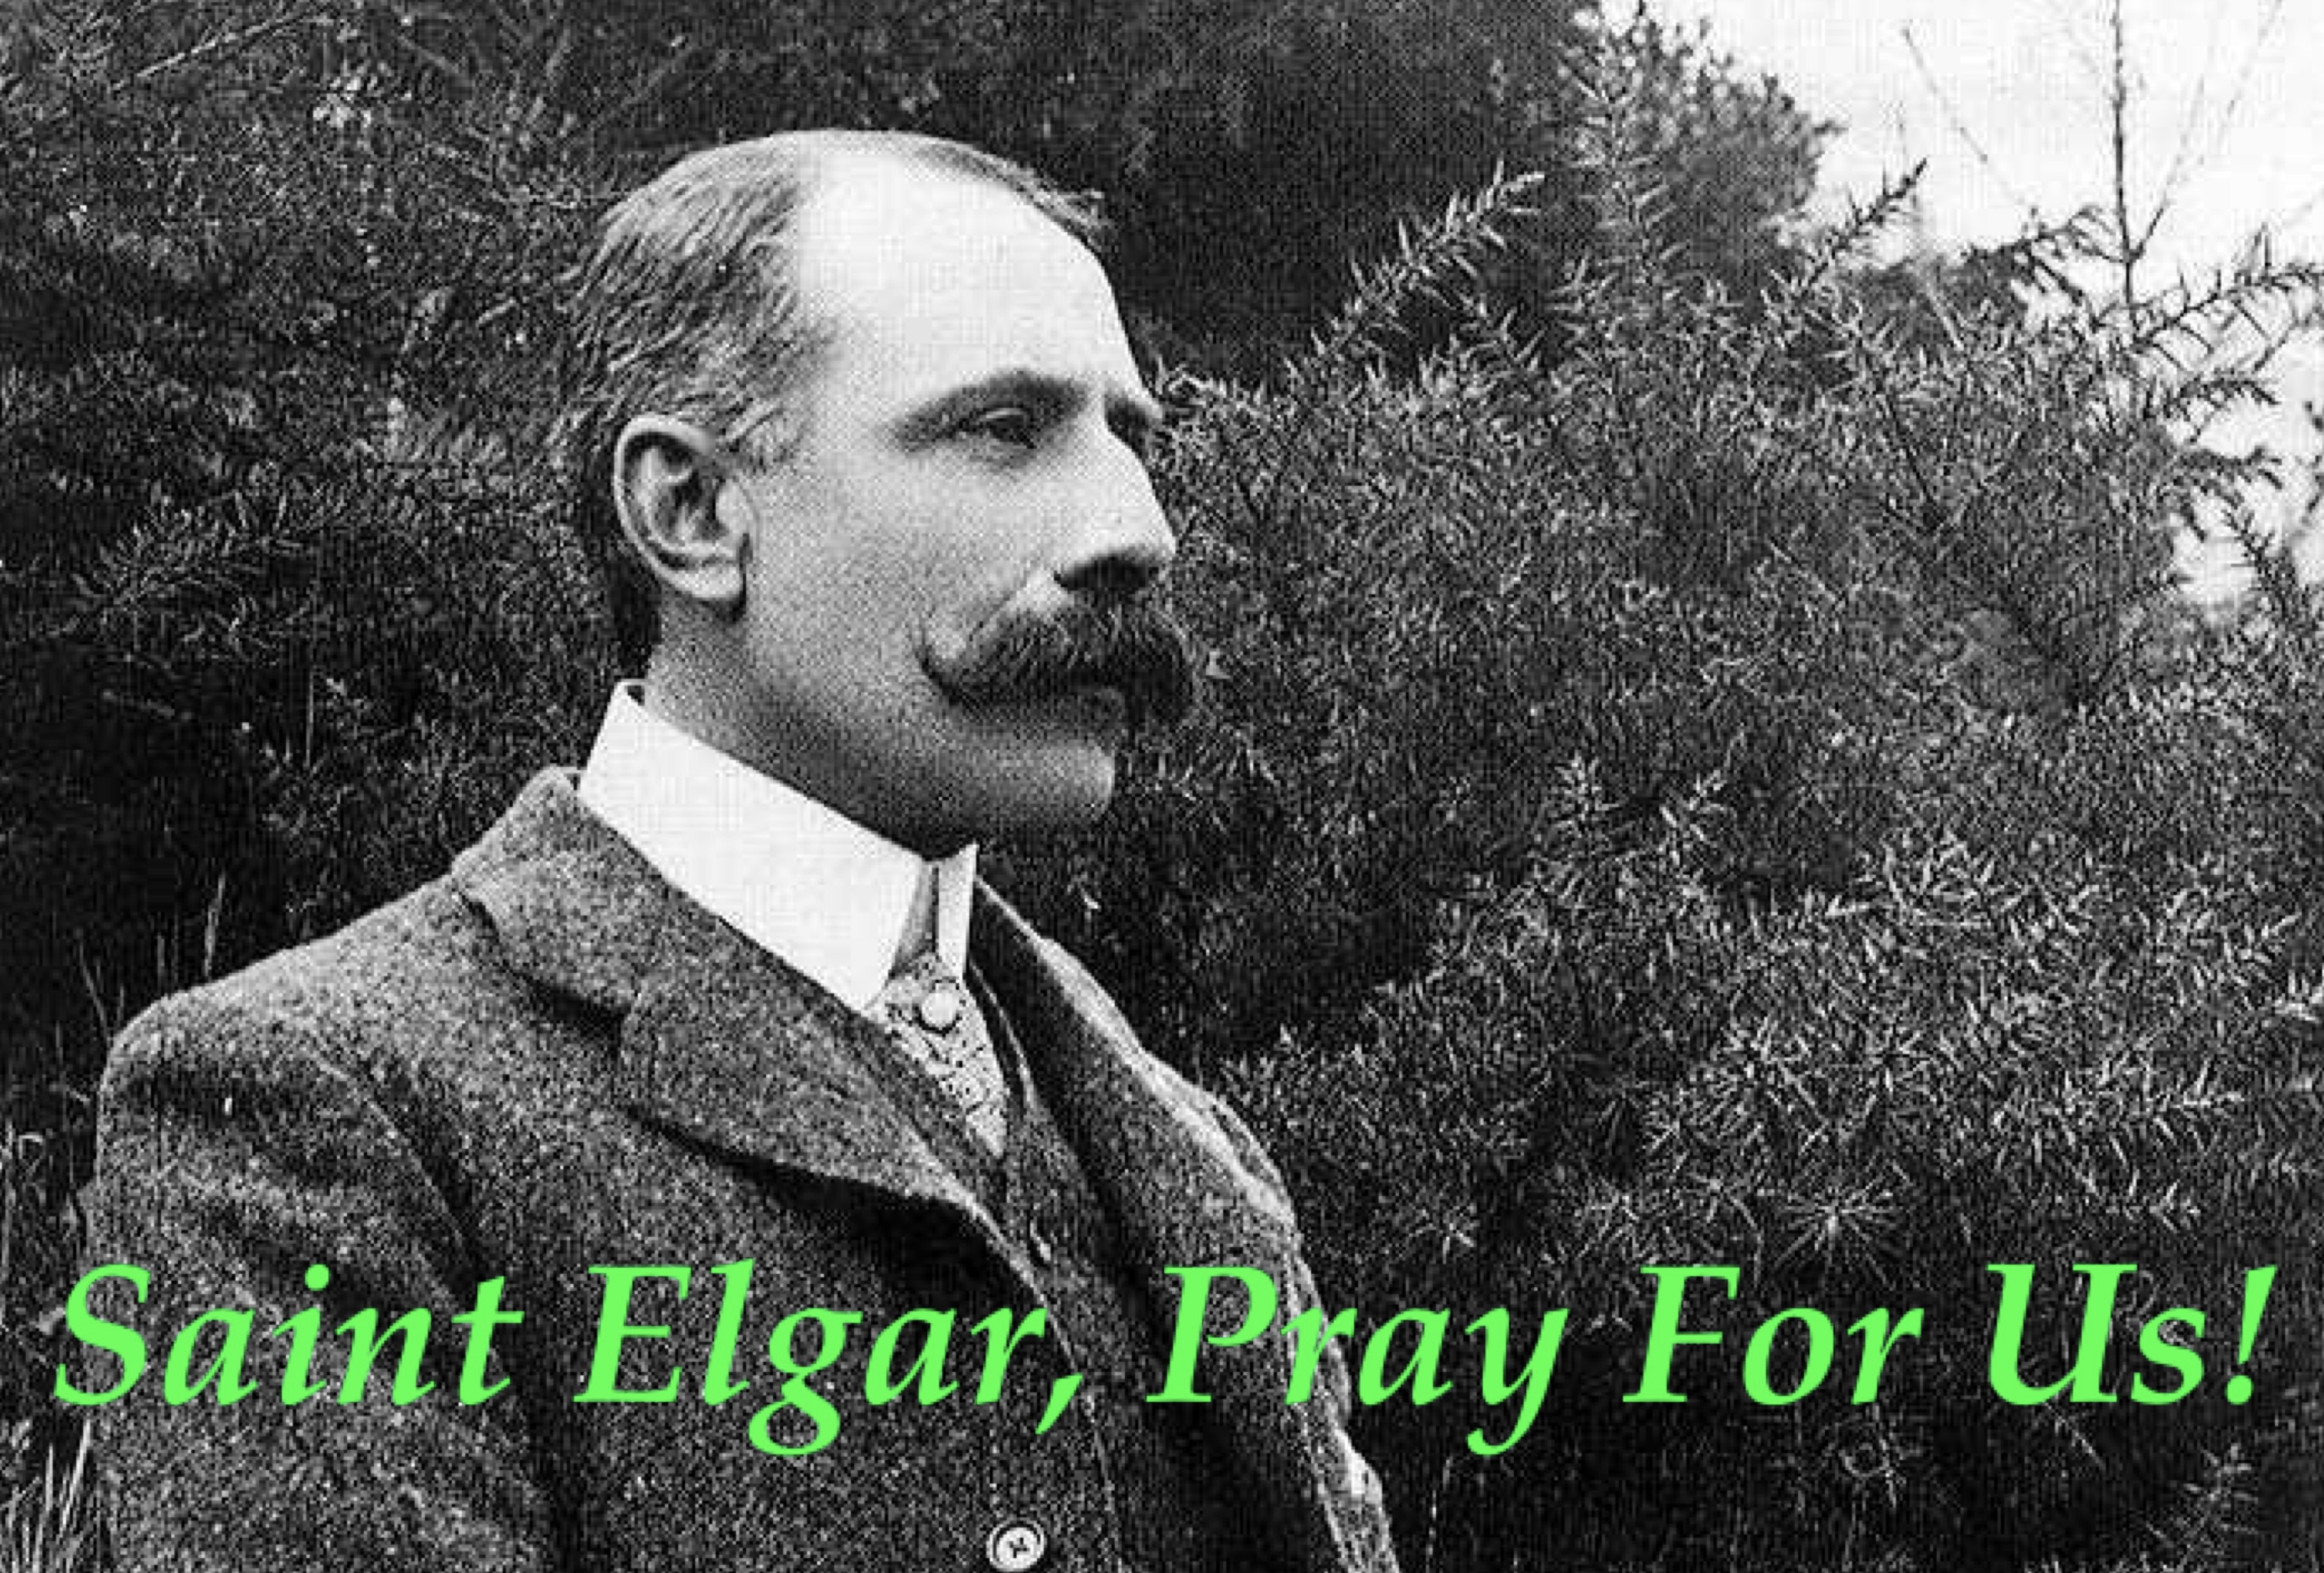 14th June - Saint Elgar